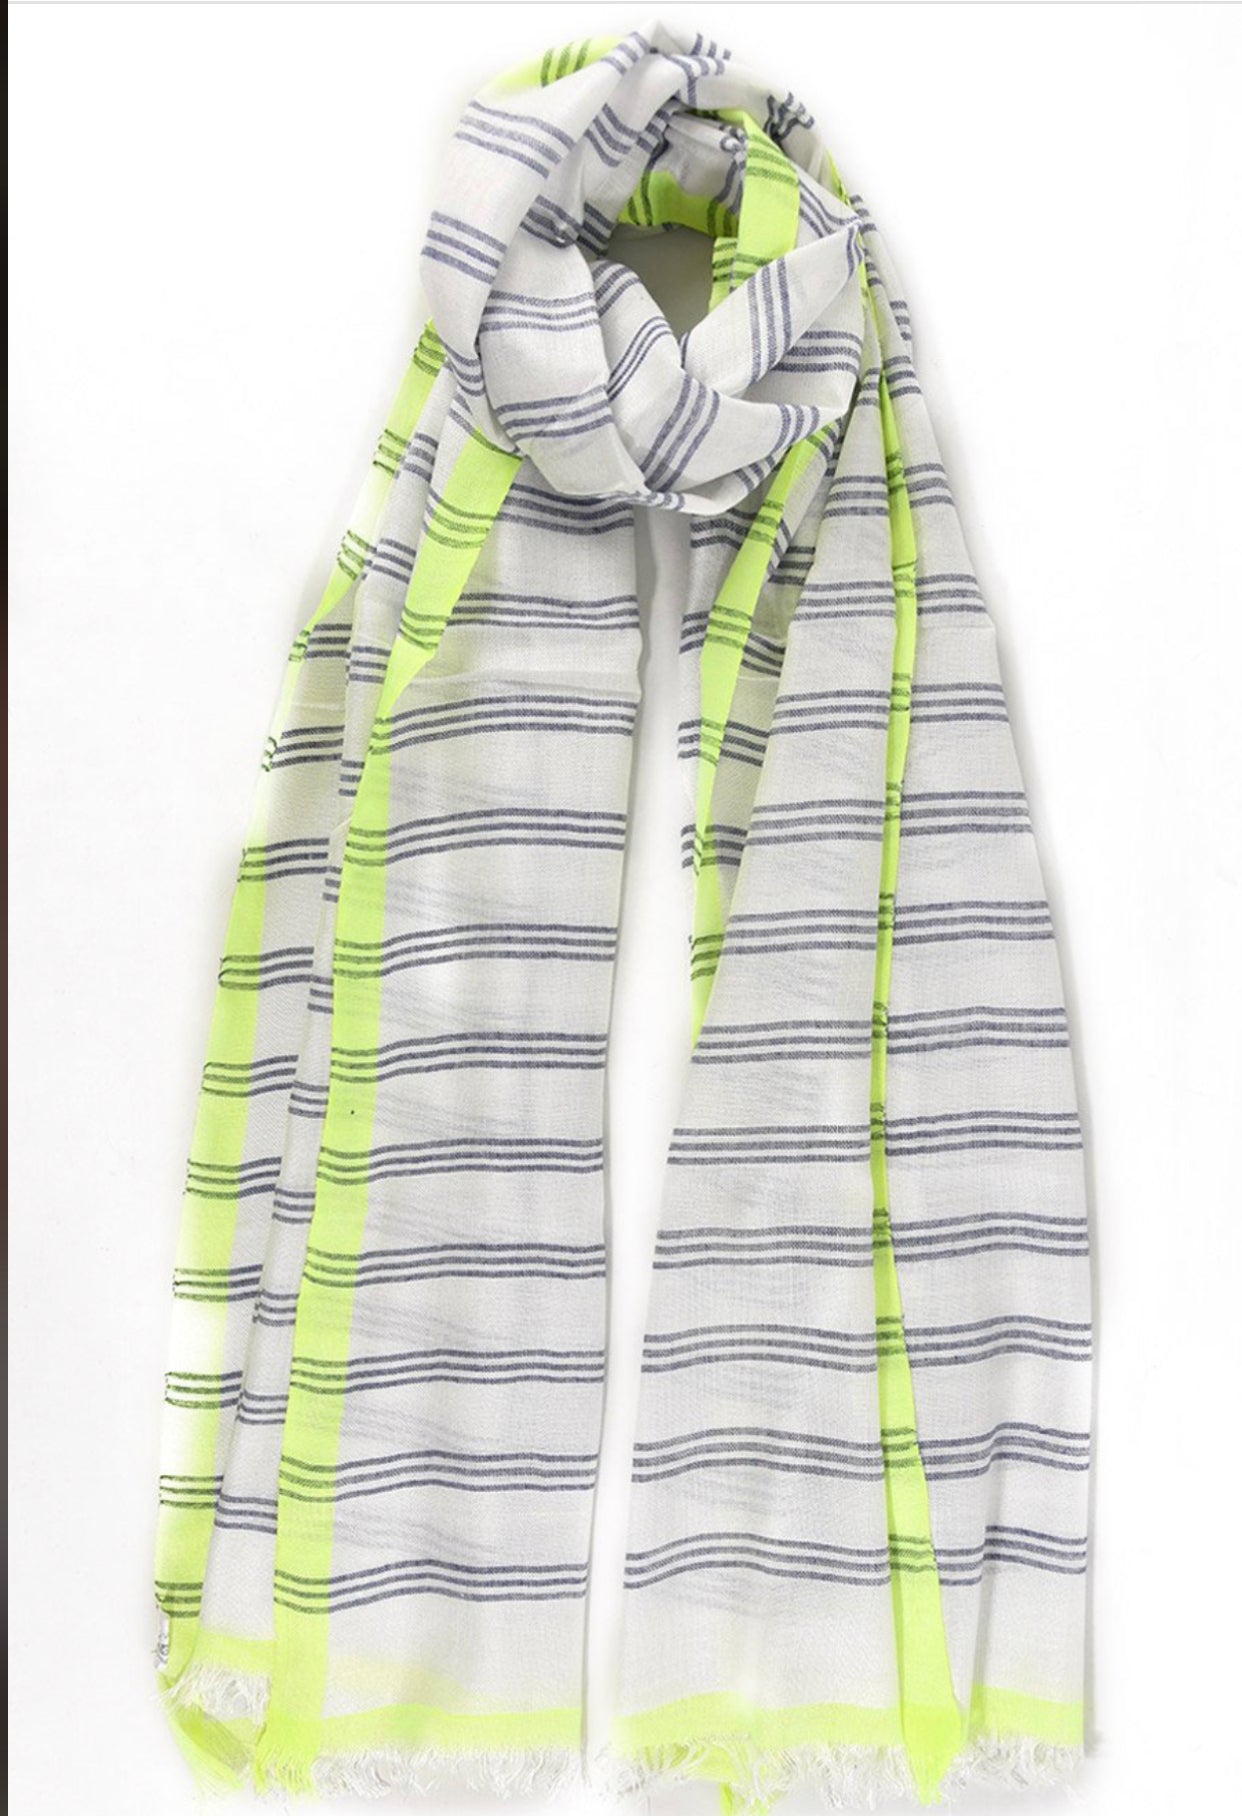 Blue & white stripey scarf with fluoro yellow trim